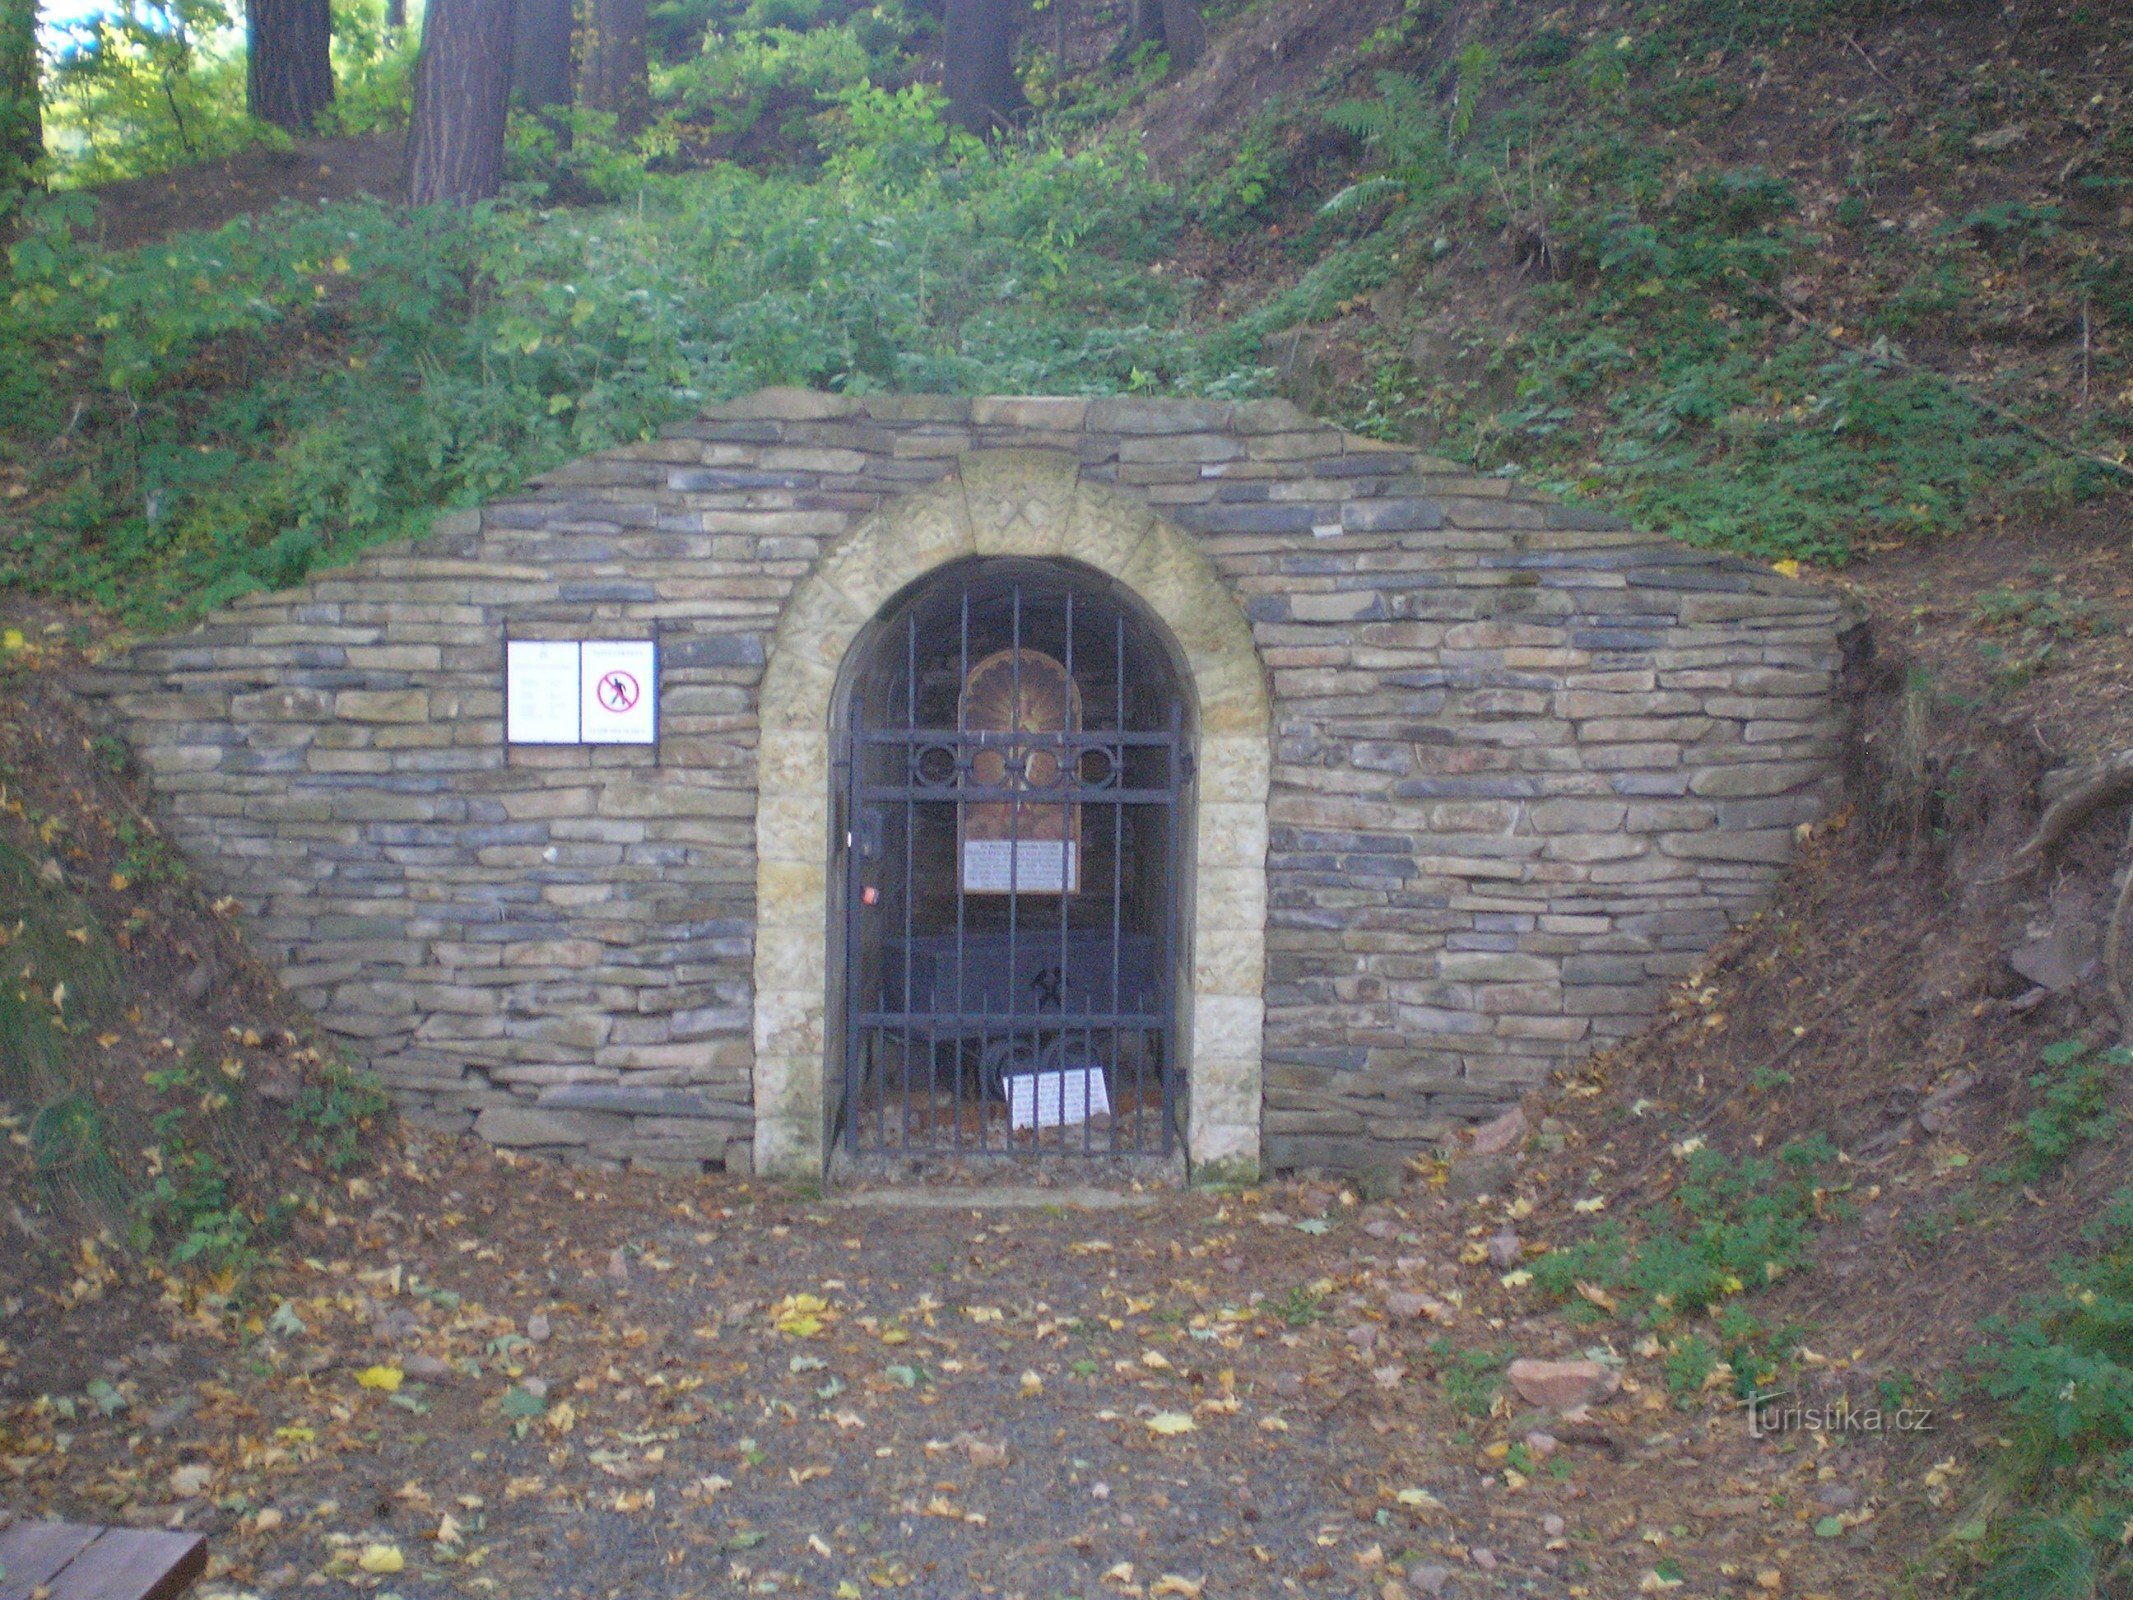 Entrance to the Kateřina mine